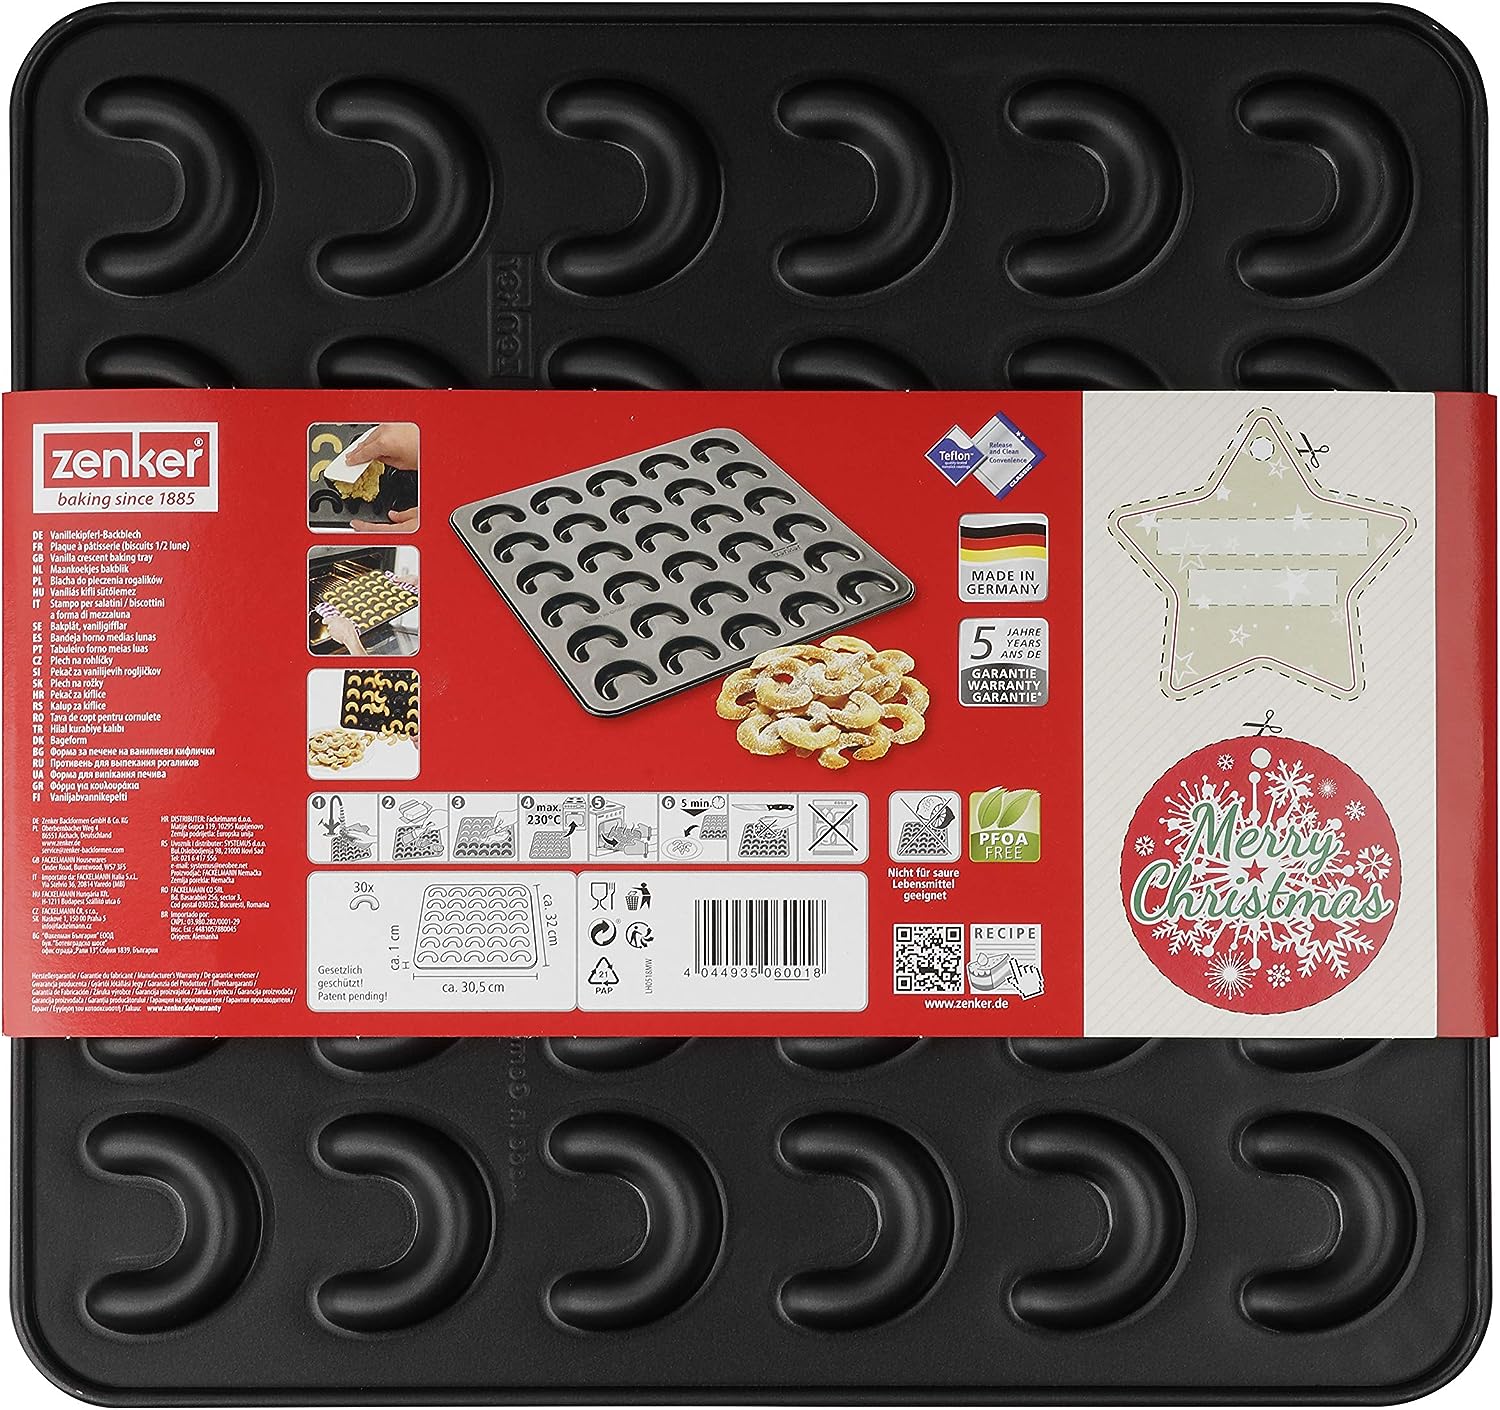 Zenker "Sparkling Christmas" Vanilla Crescent Baking Tray,  For 30 Cookies, Black